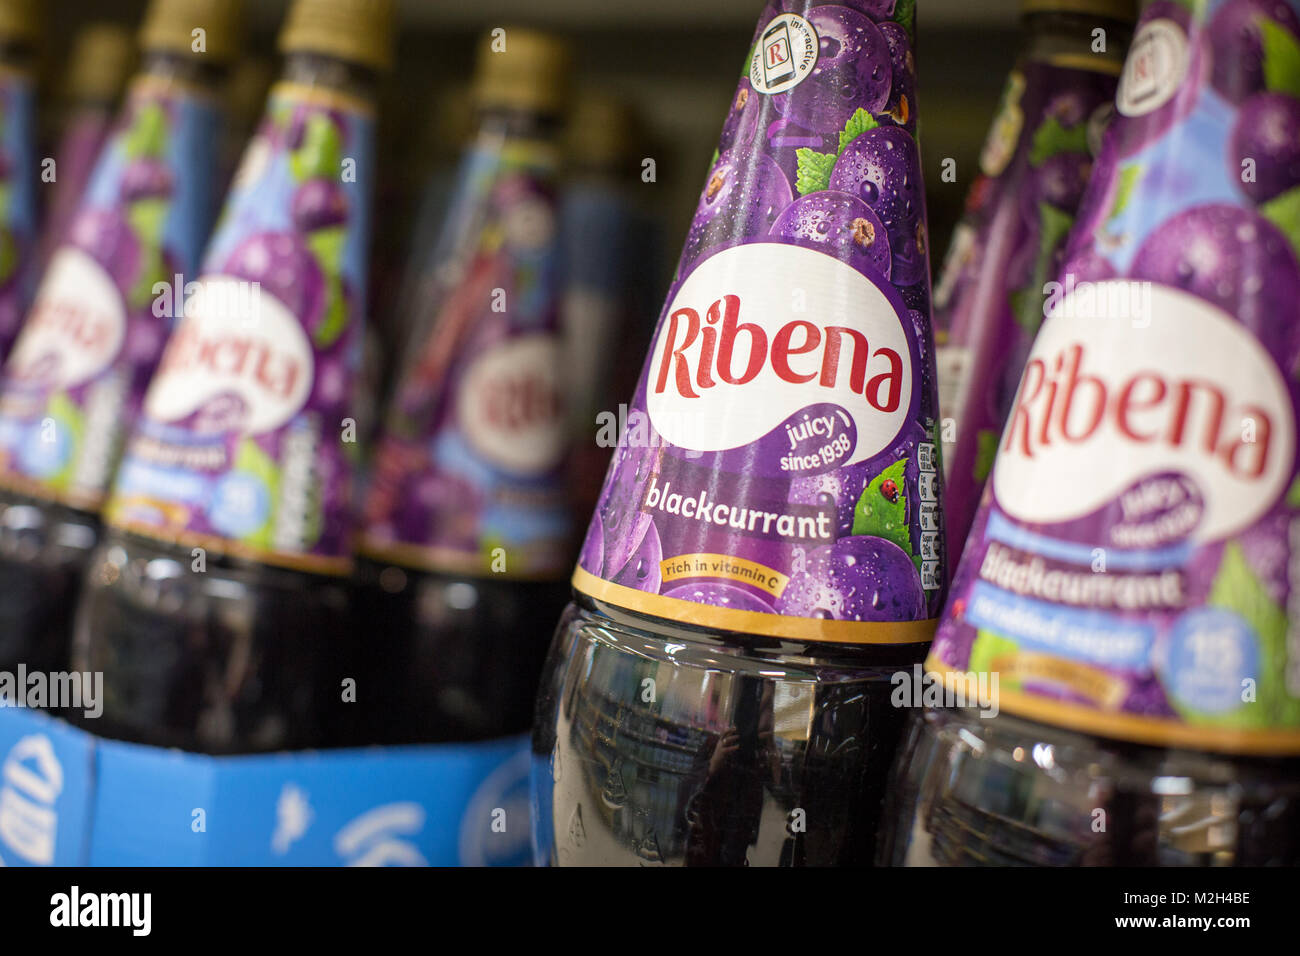 Ribena schwarze Johannisbeere trinken in den Regalen der Supermärkte Stockfoto